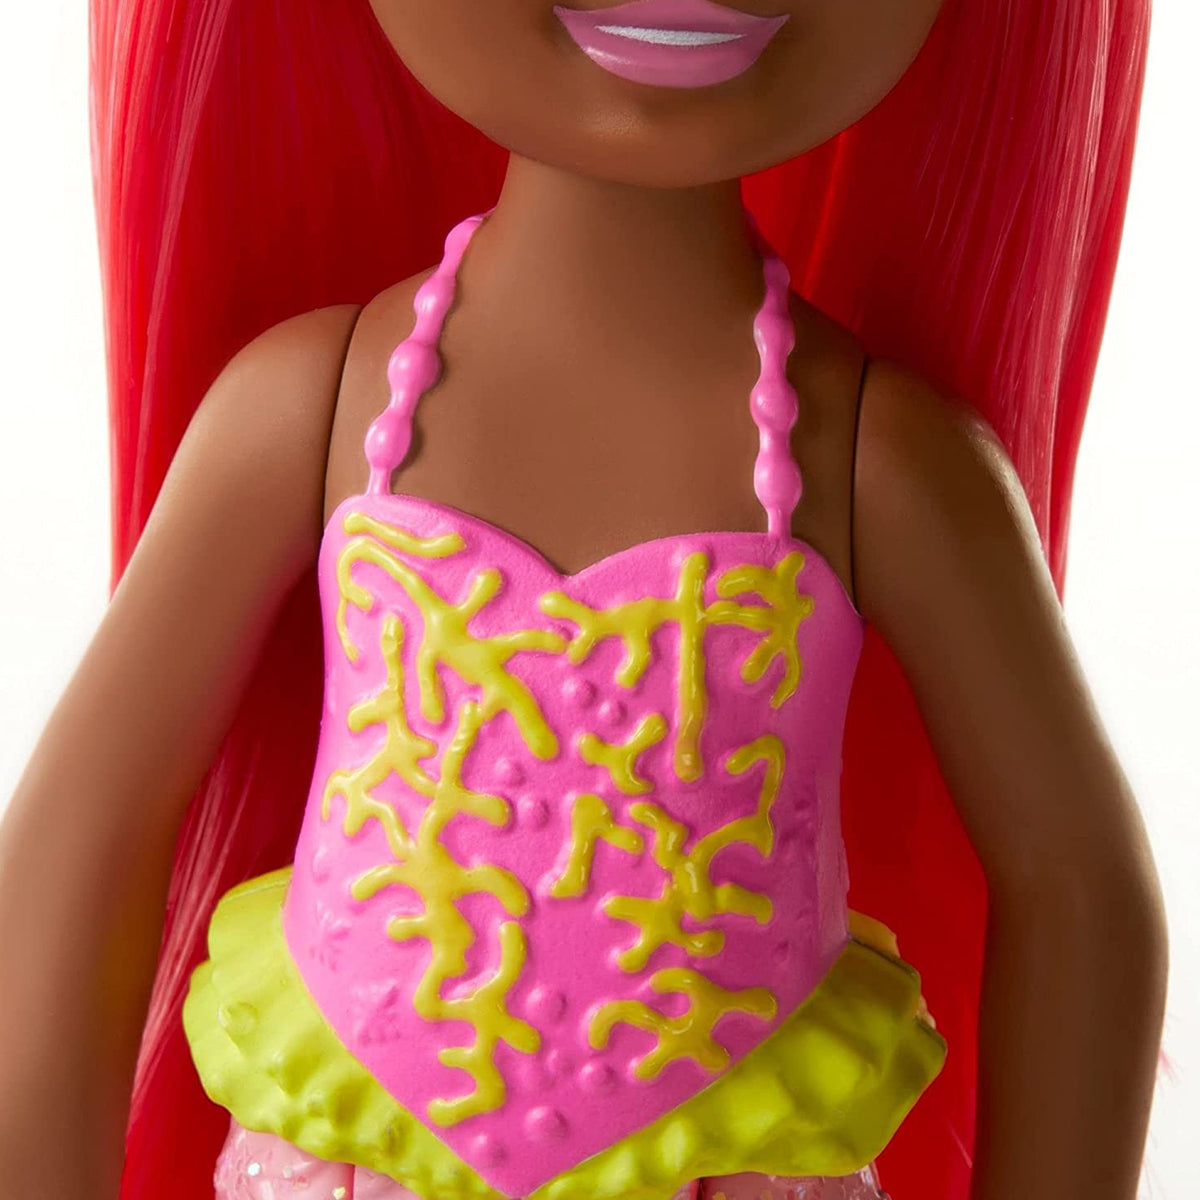 Barbie Dreamtopia Chelsea Mermaid Doll GJJ85 (Styles Vary - One Supplied)